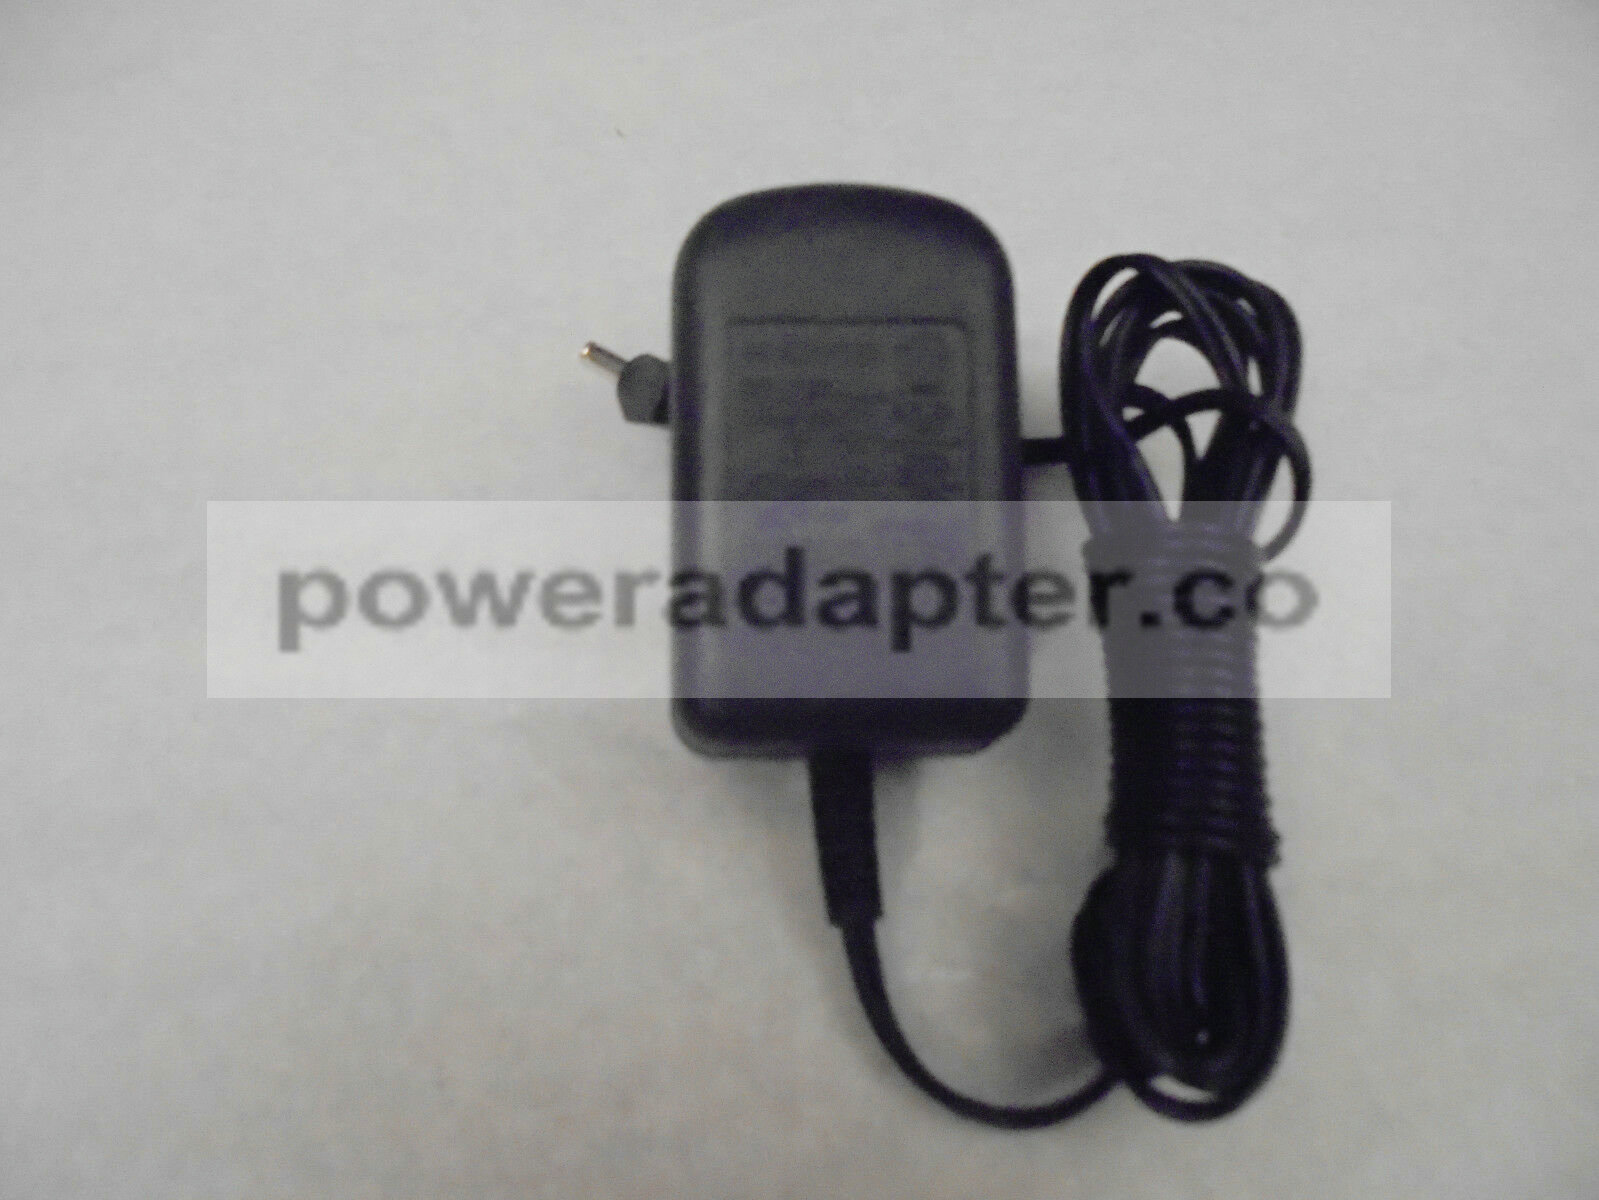 AC Power Adapter PS-0035 Phone Handset Charger 120V 60HZ Output: 8V 300MA Output Voltage: 6V Modified Item: No Brand: - Click Image to Close